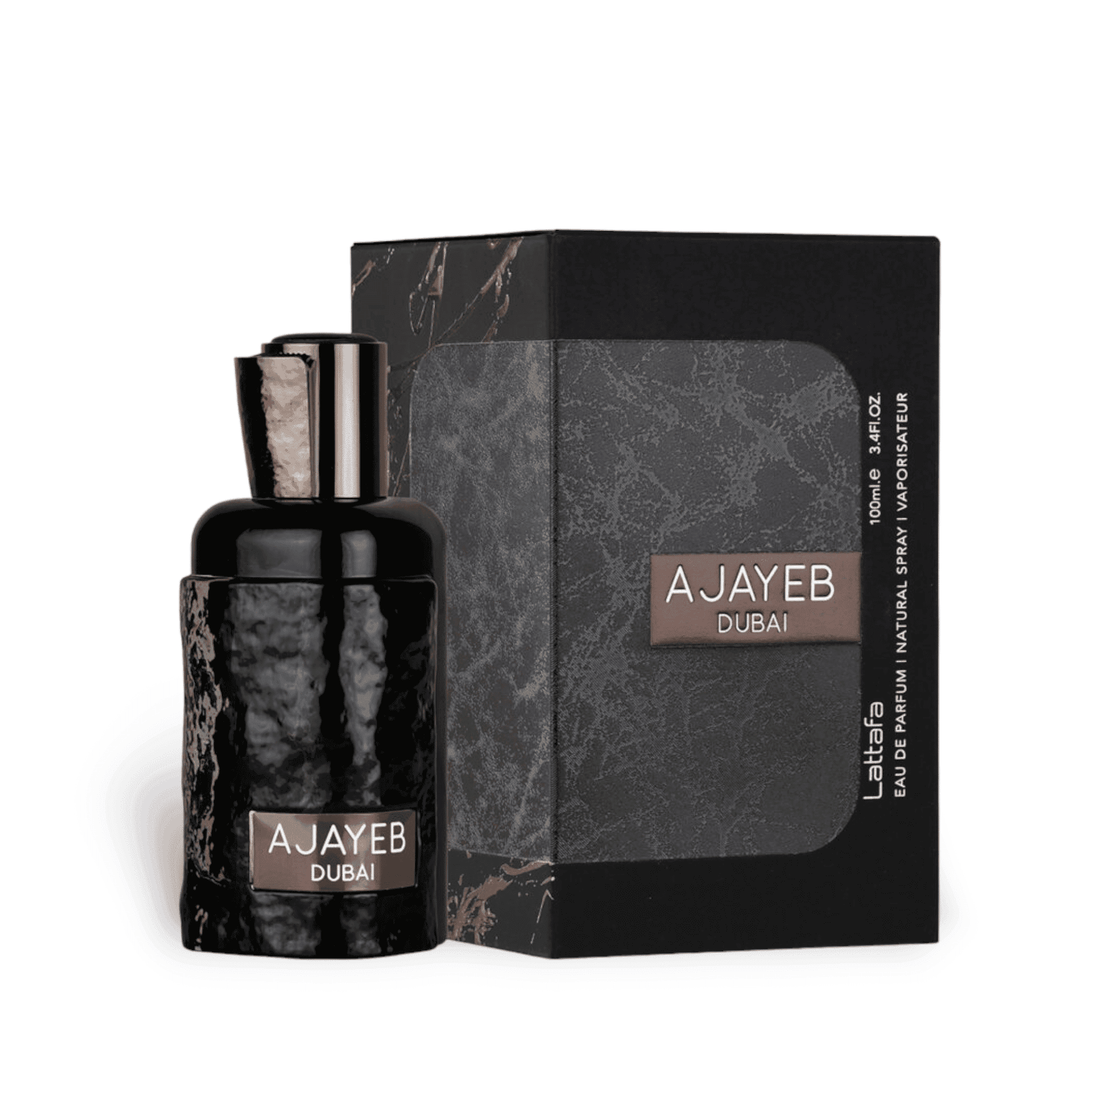 Ajayeb Dubai by Lattafa perfume showcasing enticing saffron and pineapple notes